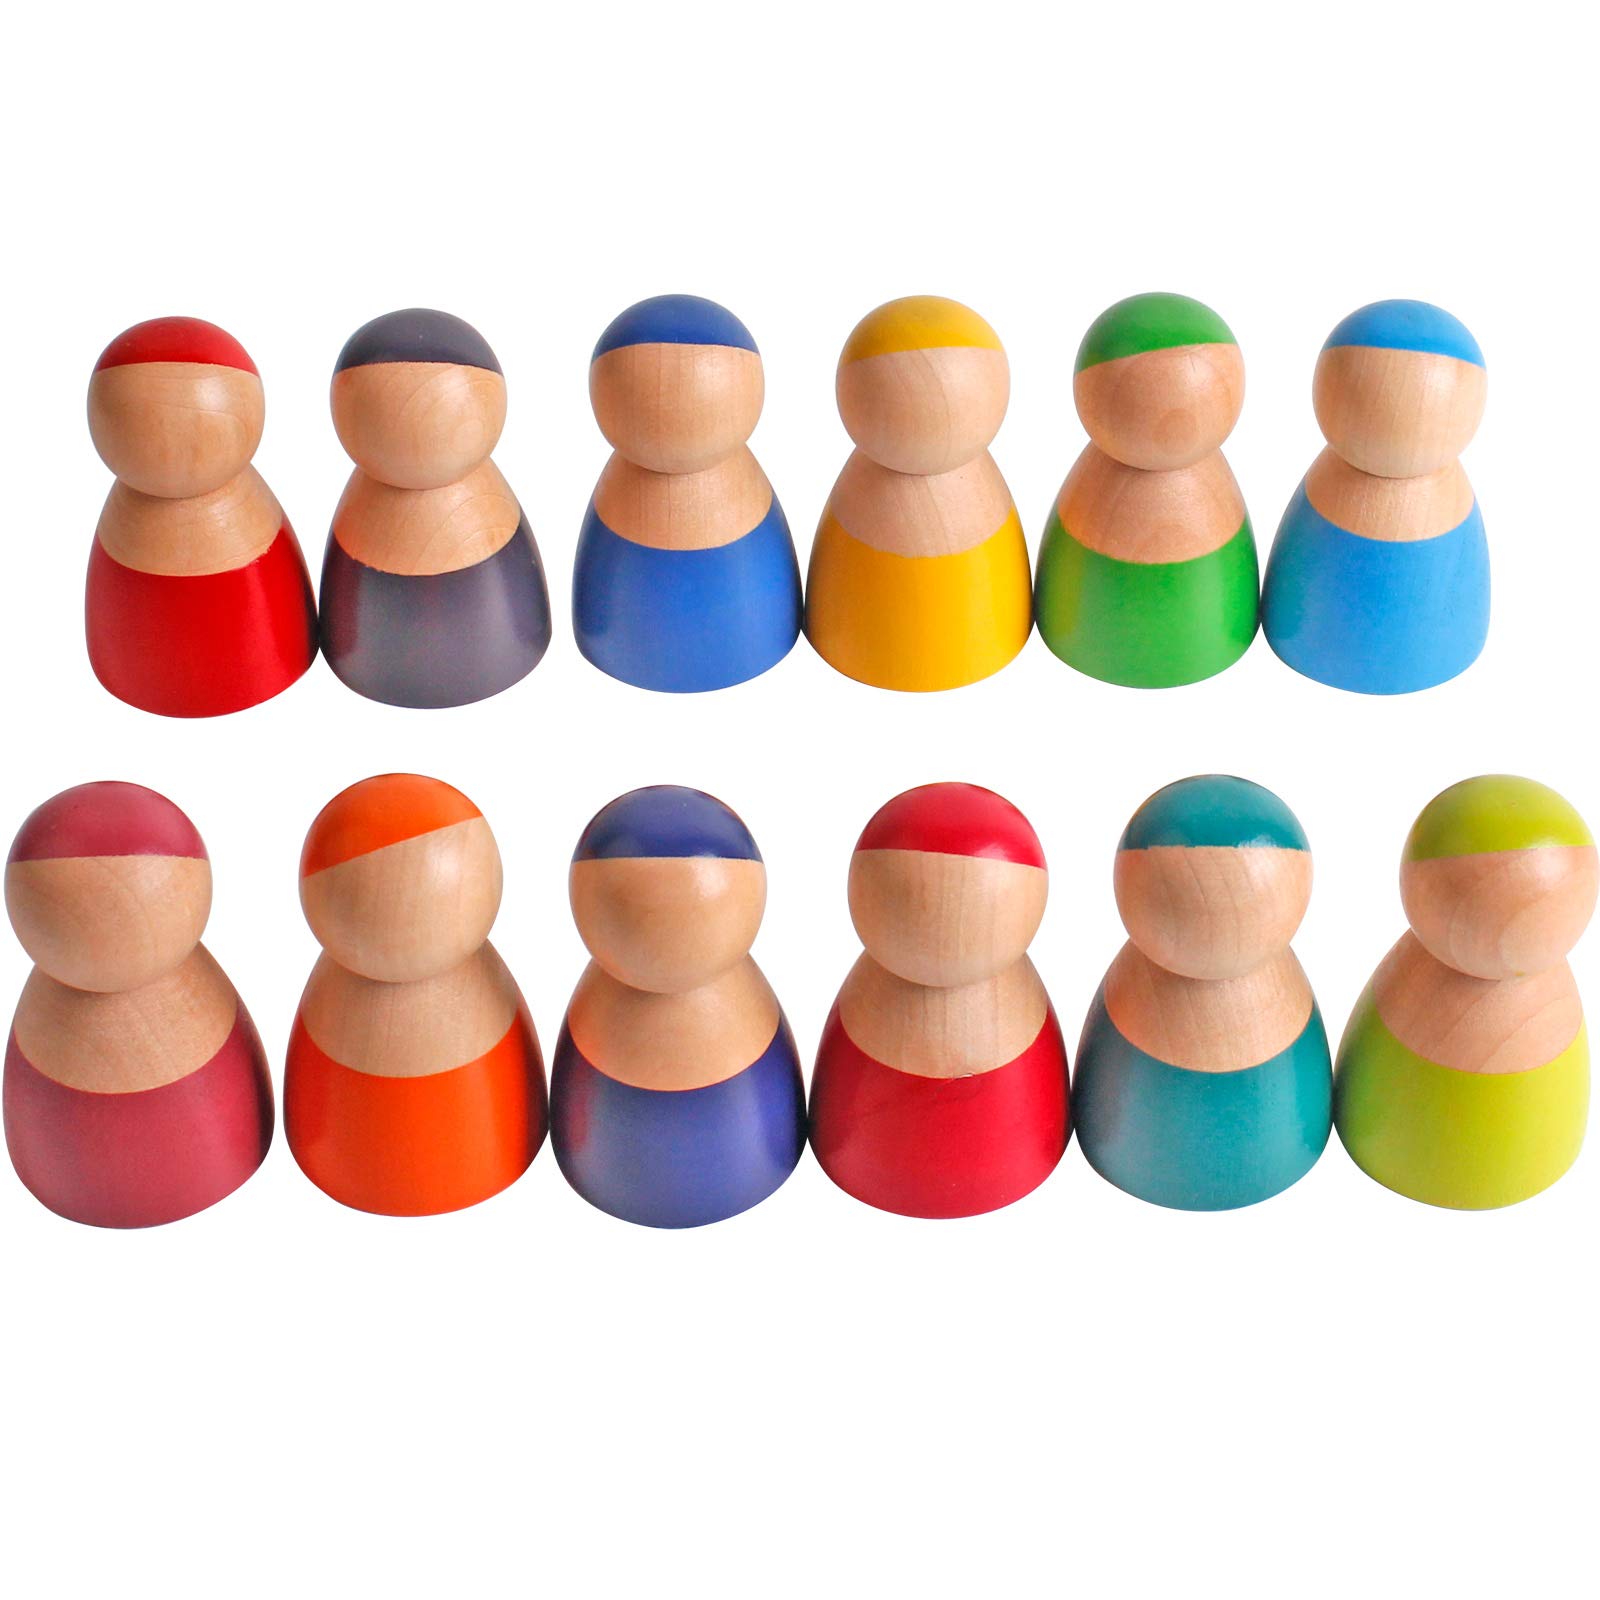 Dinhon 12 Wooden Rainbow Dolls Friends Toys